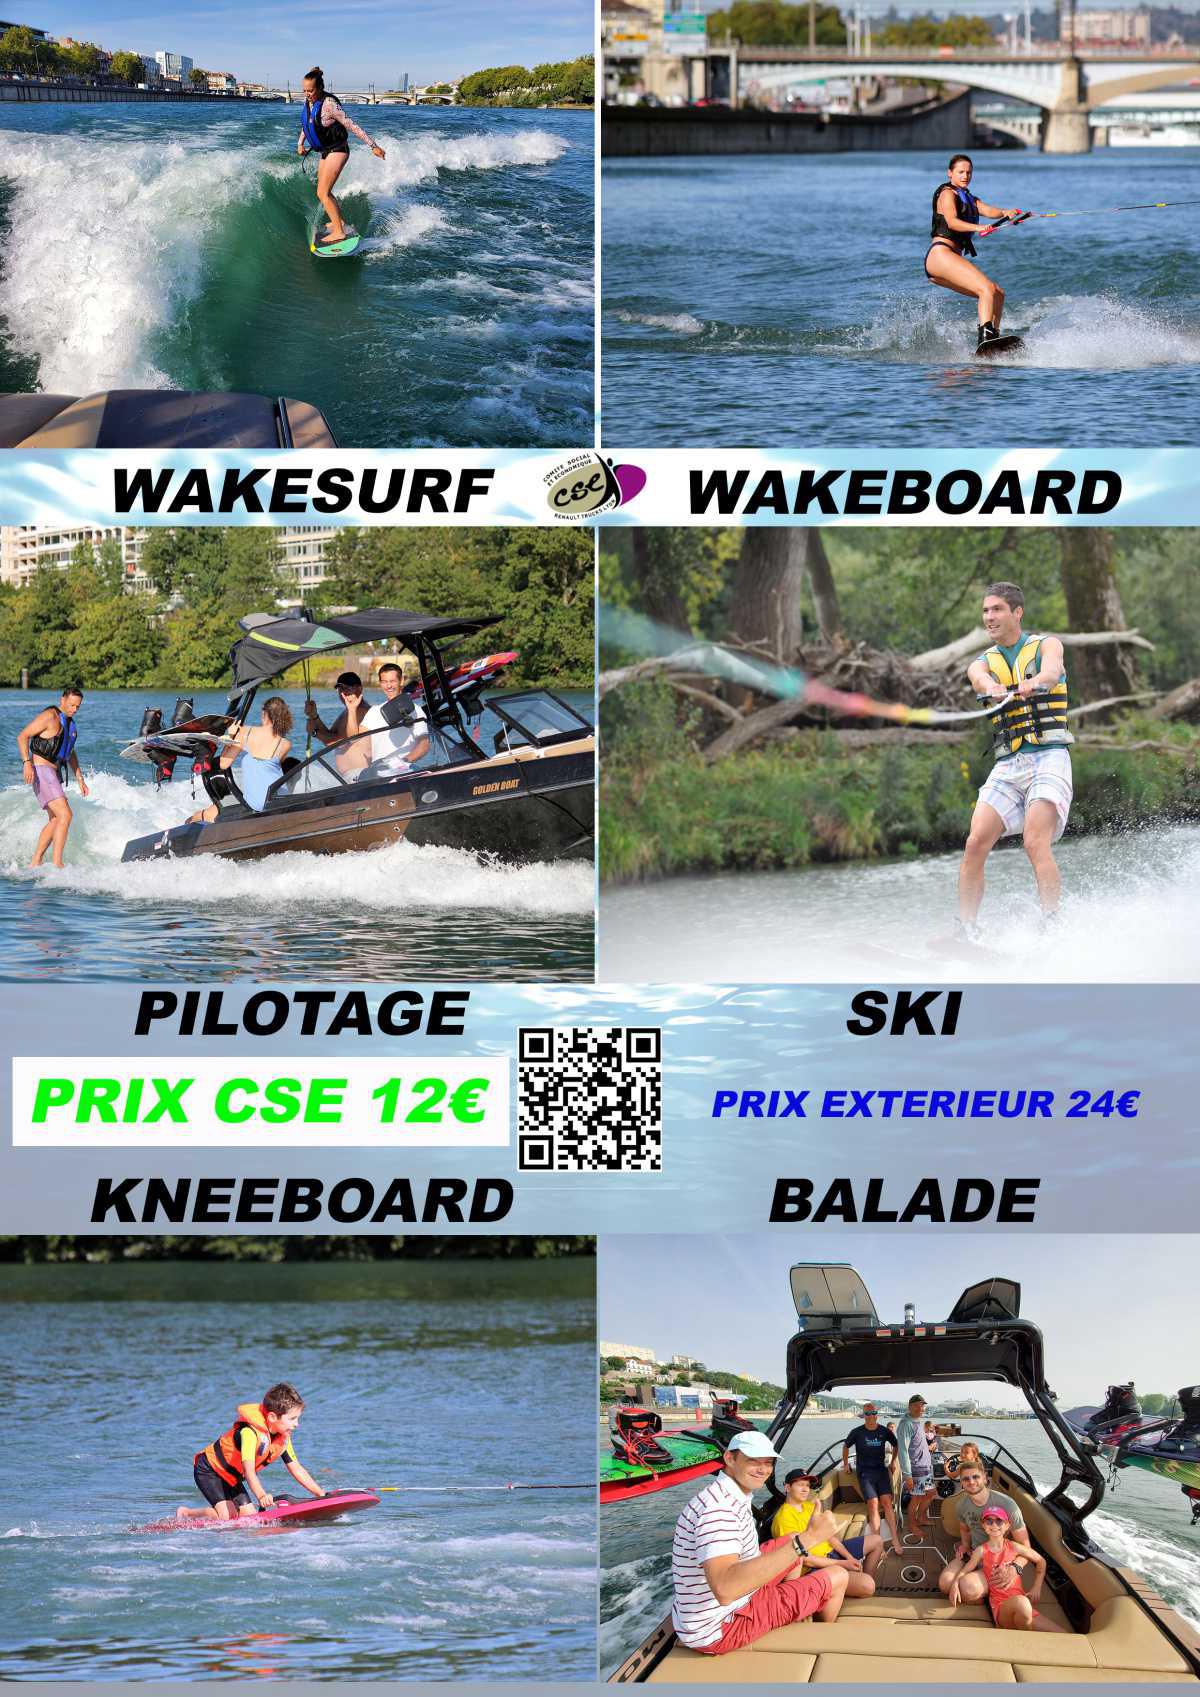 Ski nautique, wake, surf, pilotage... et balade bateau !